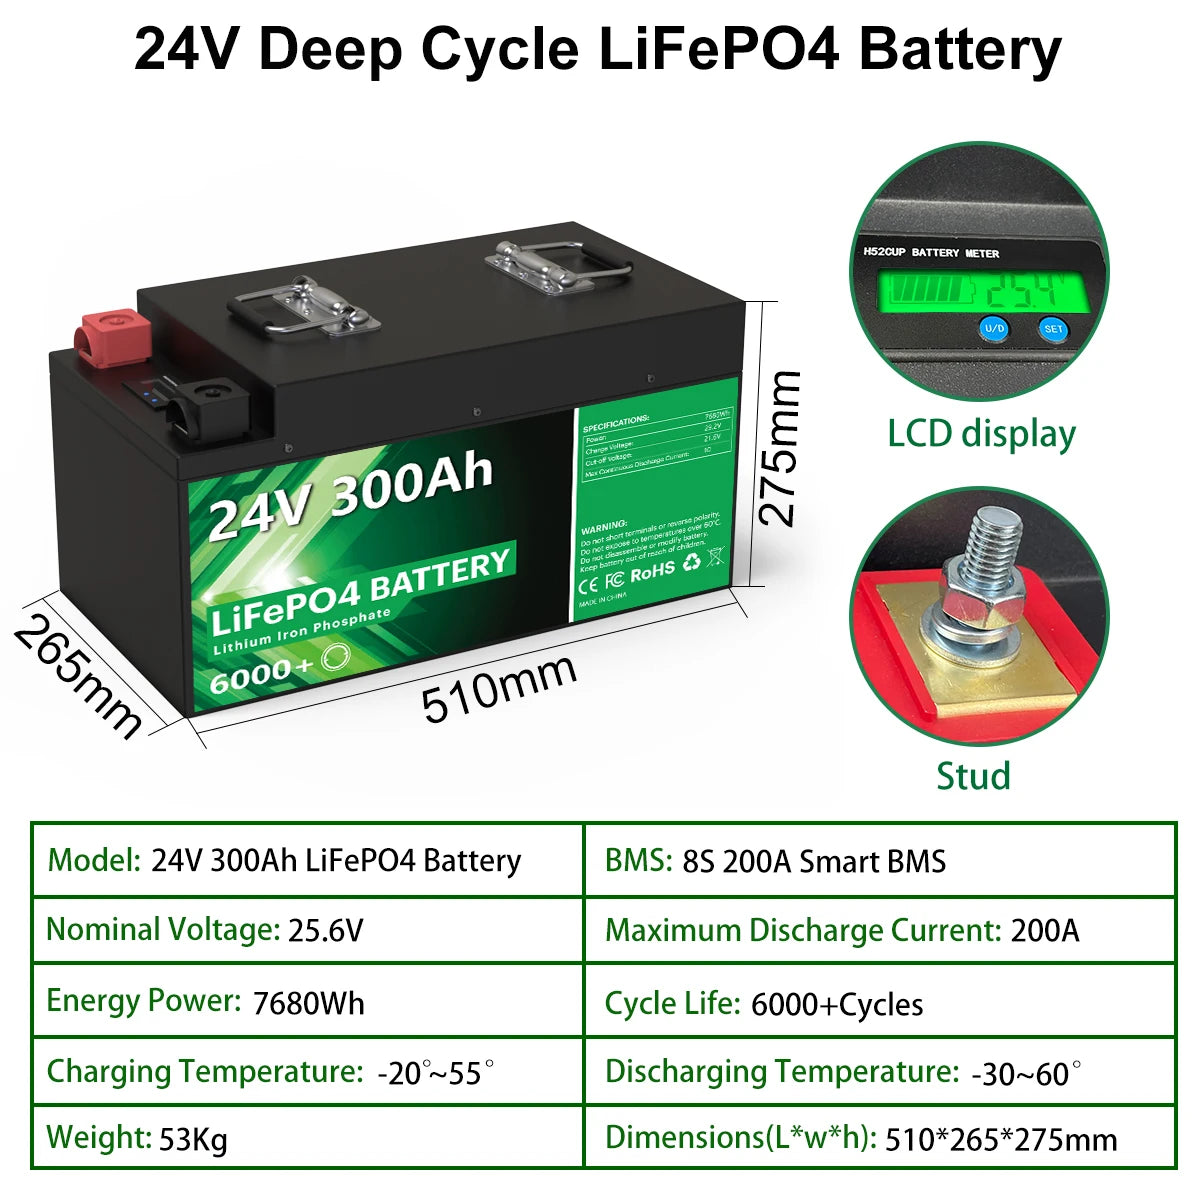 LiFePO4 24V 300Ah 200Ah 100Ah Battery, Product: 24V Deep Cycle LiFePO4 Battery. Specifications: